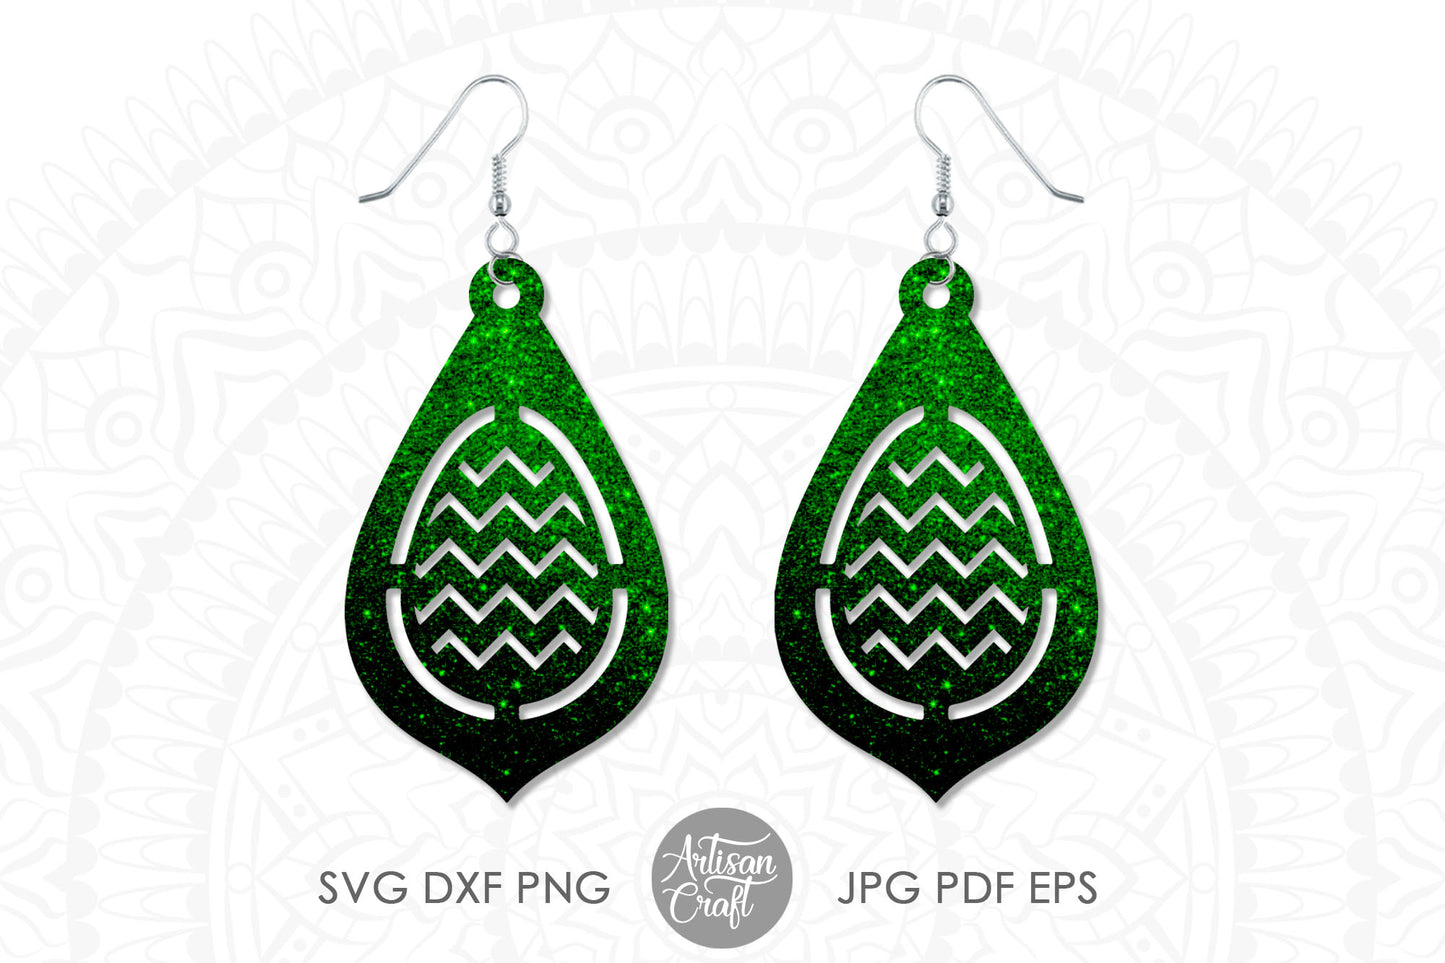 Easter earrings SVG with Easter eggs